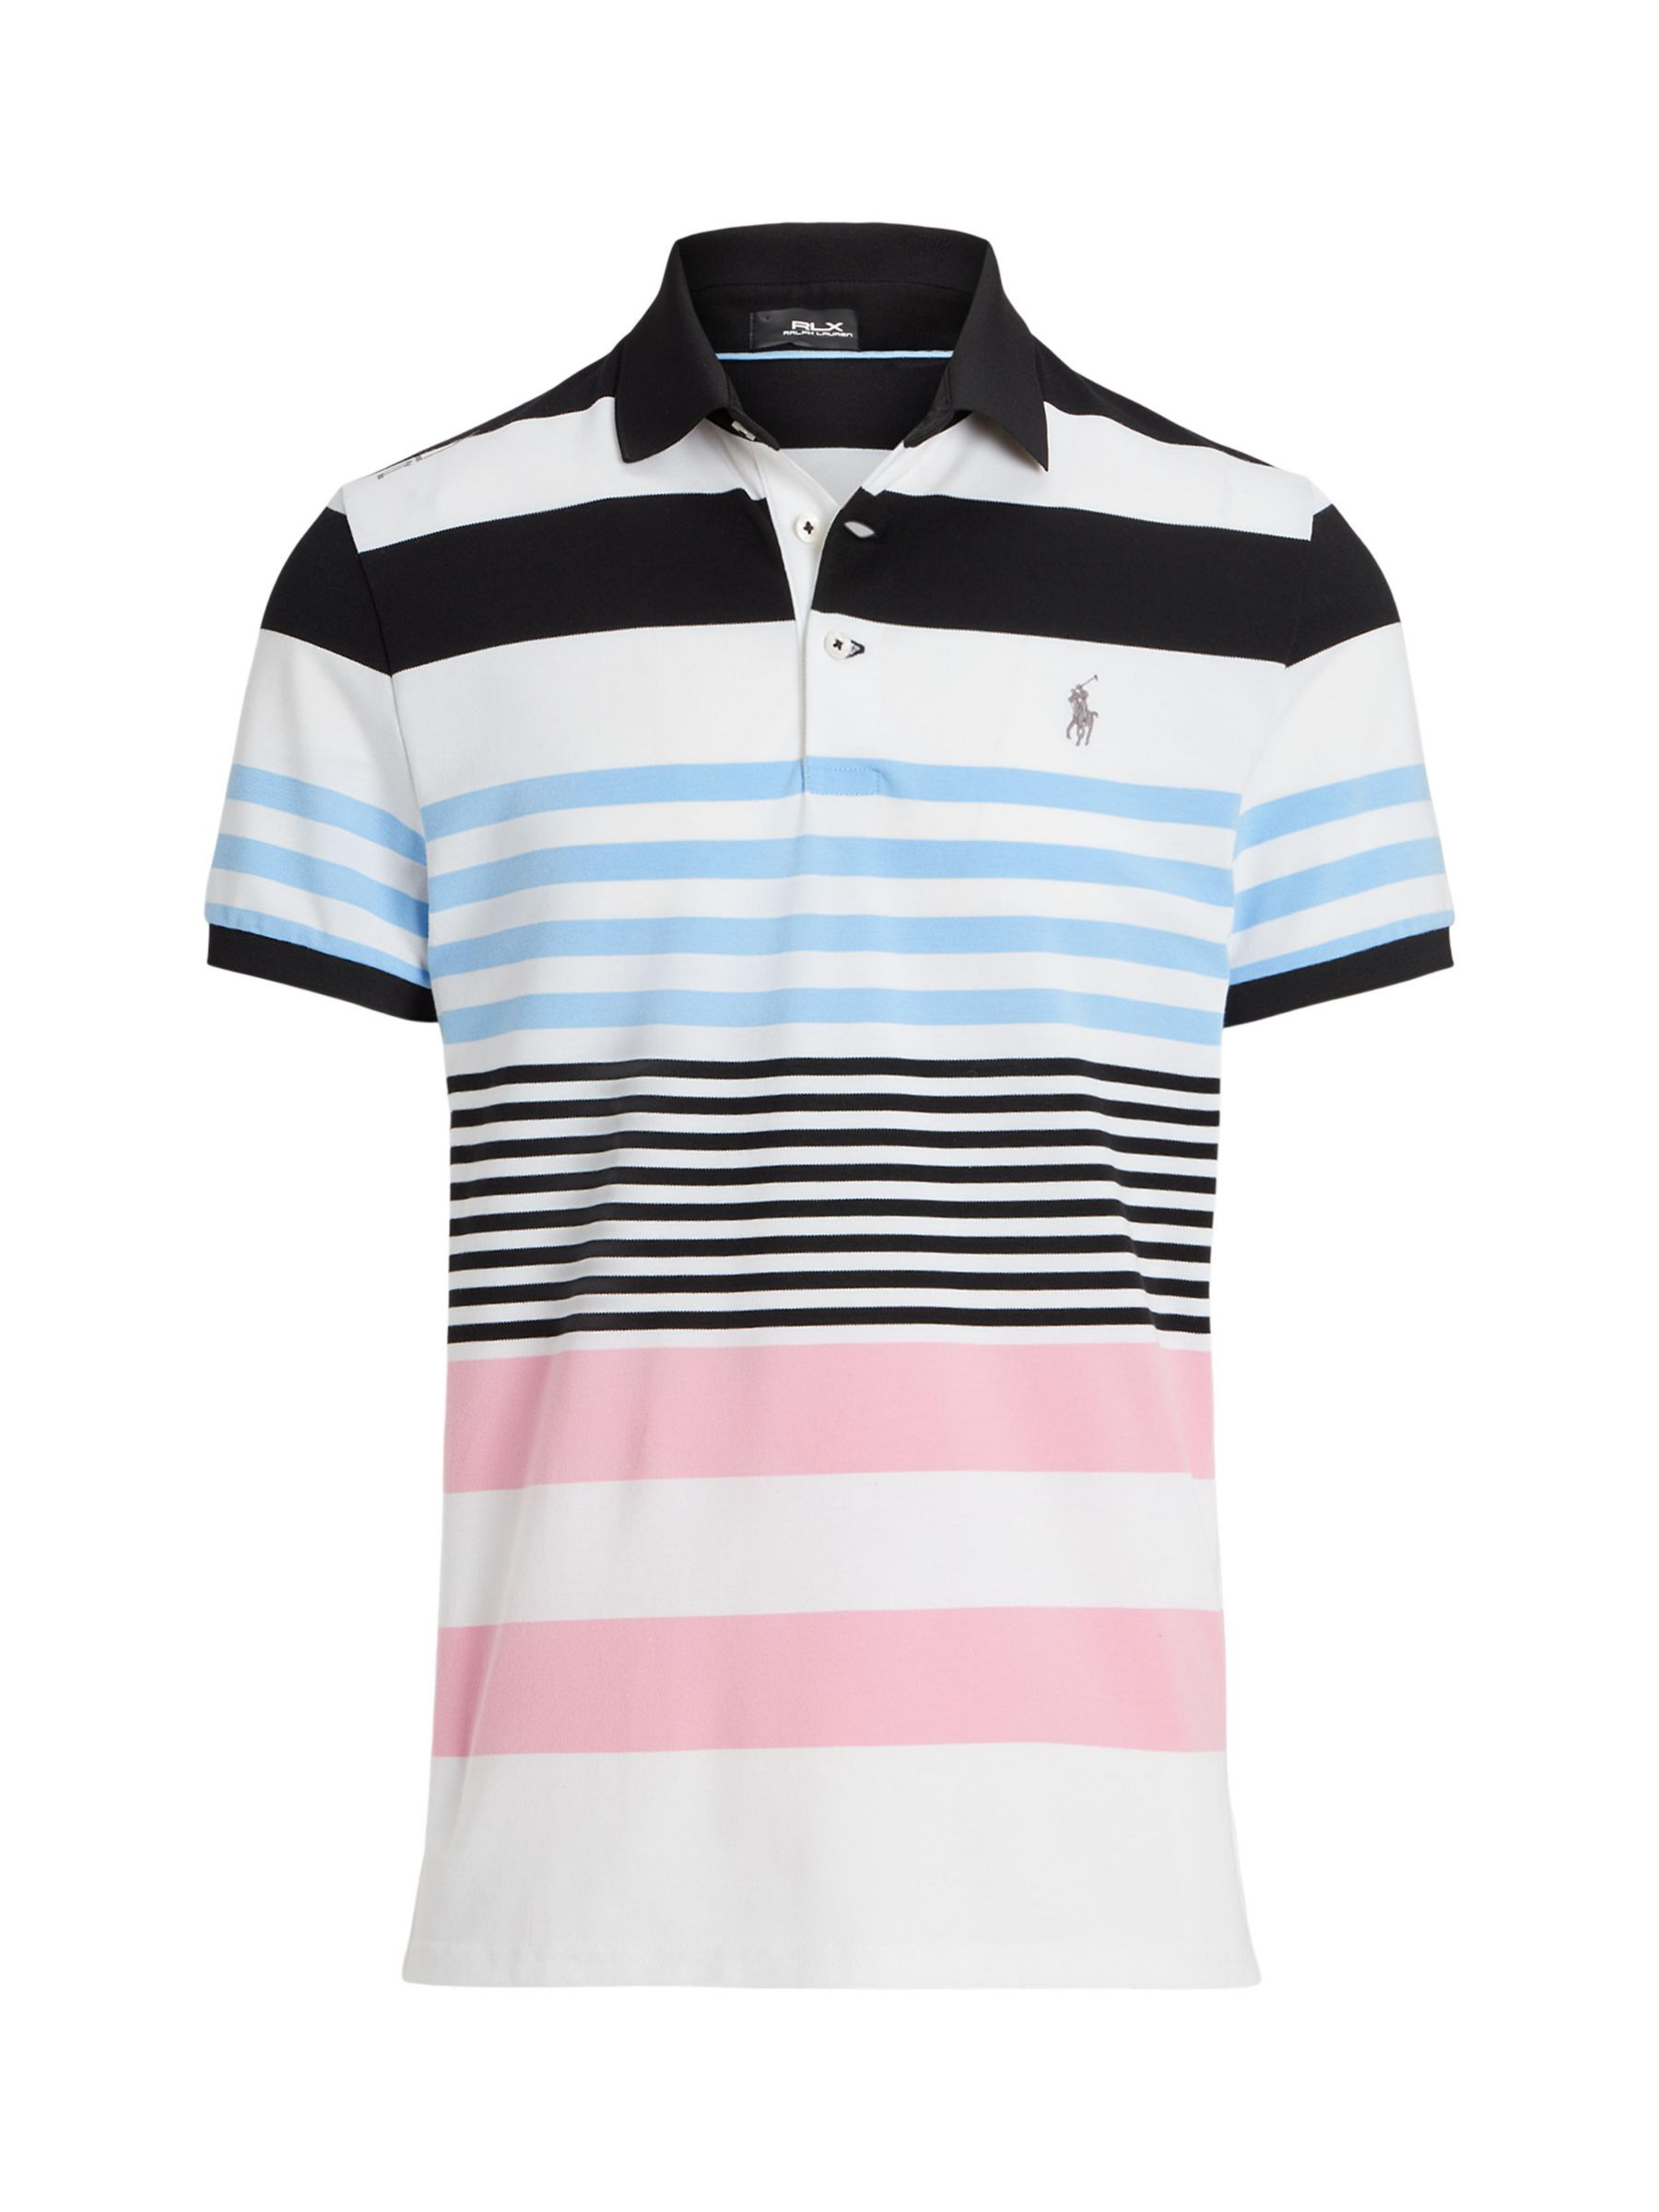 Buy Polo Golf Ralph Lauren Tailored Fit Performance Stripe Polo Shirt, Black/Multi Online at johnlewis.com